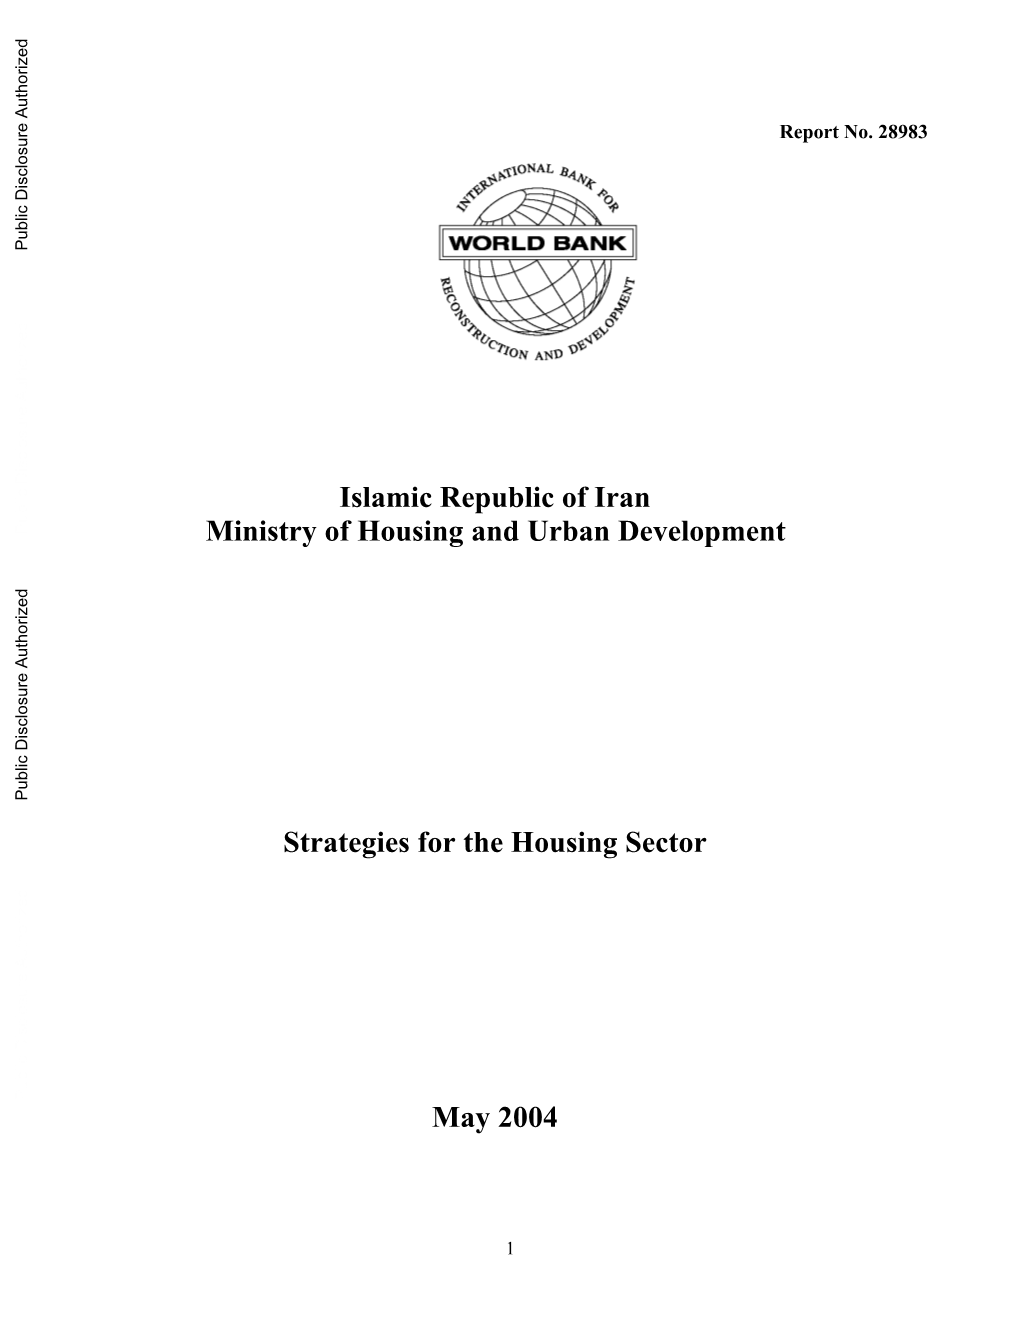 Islamic Republic of Iran Ministry of Housing and Urban Development